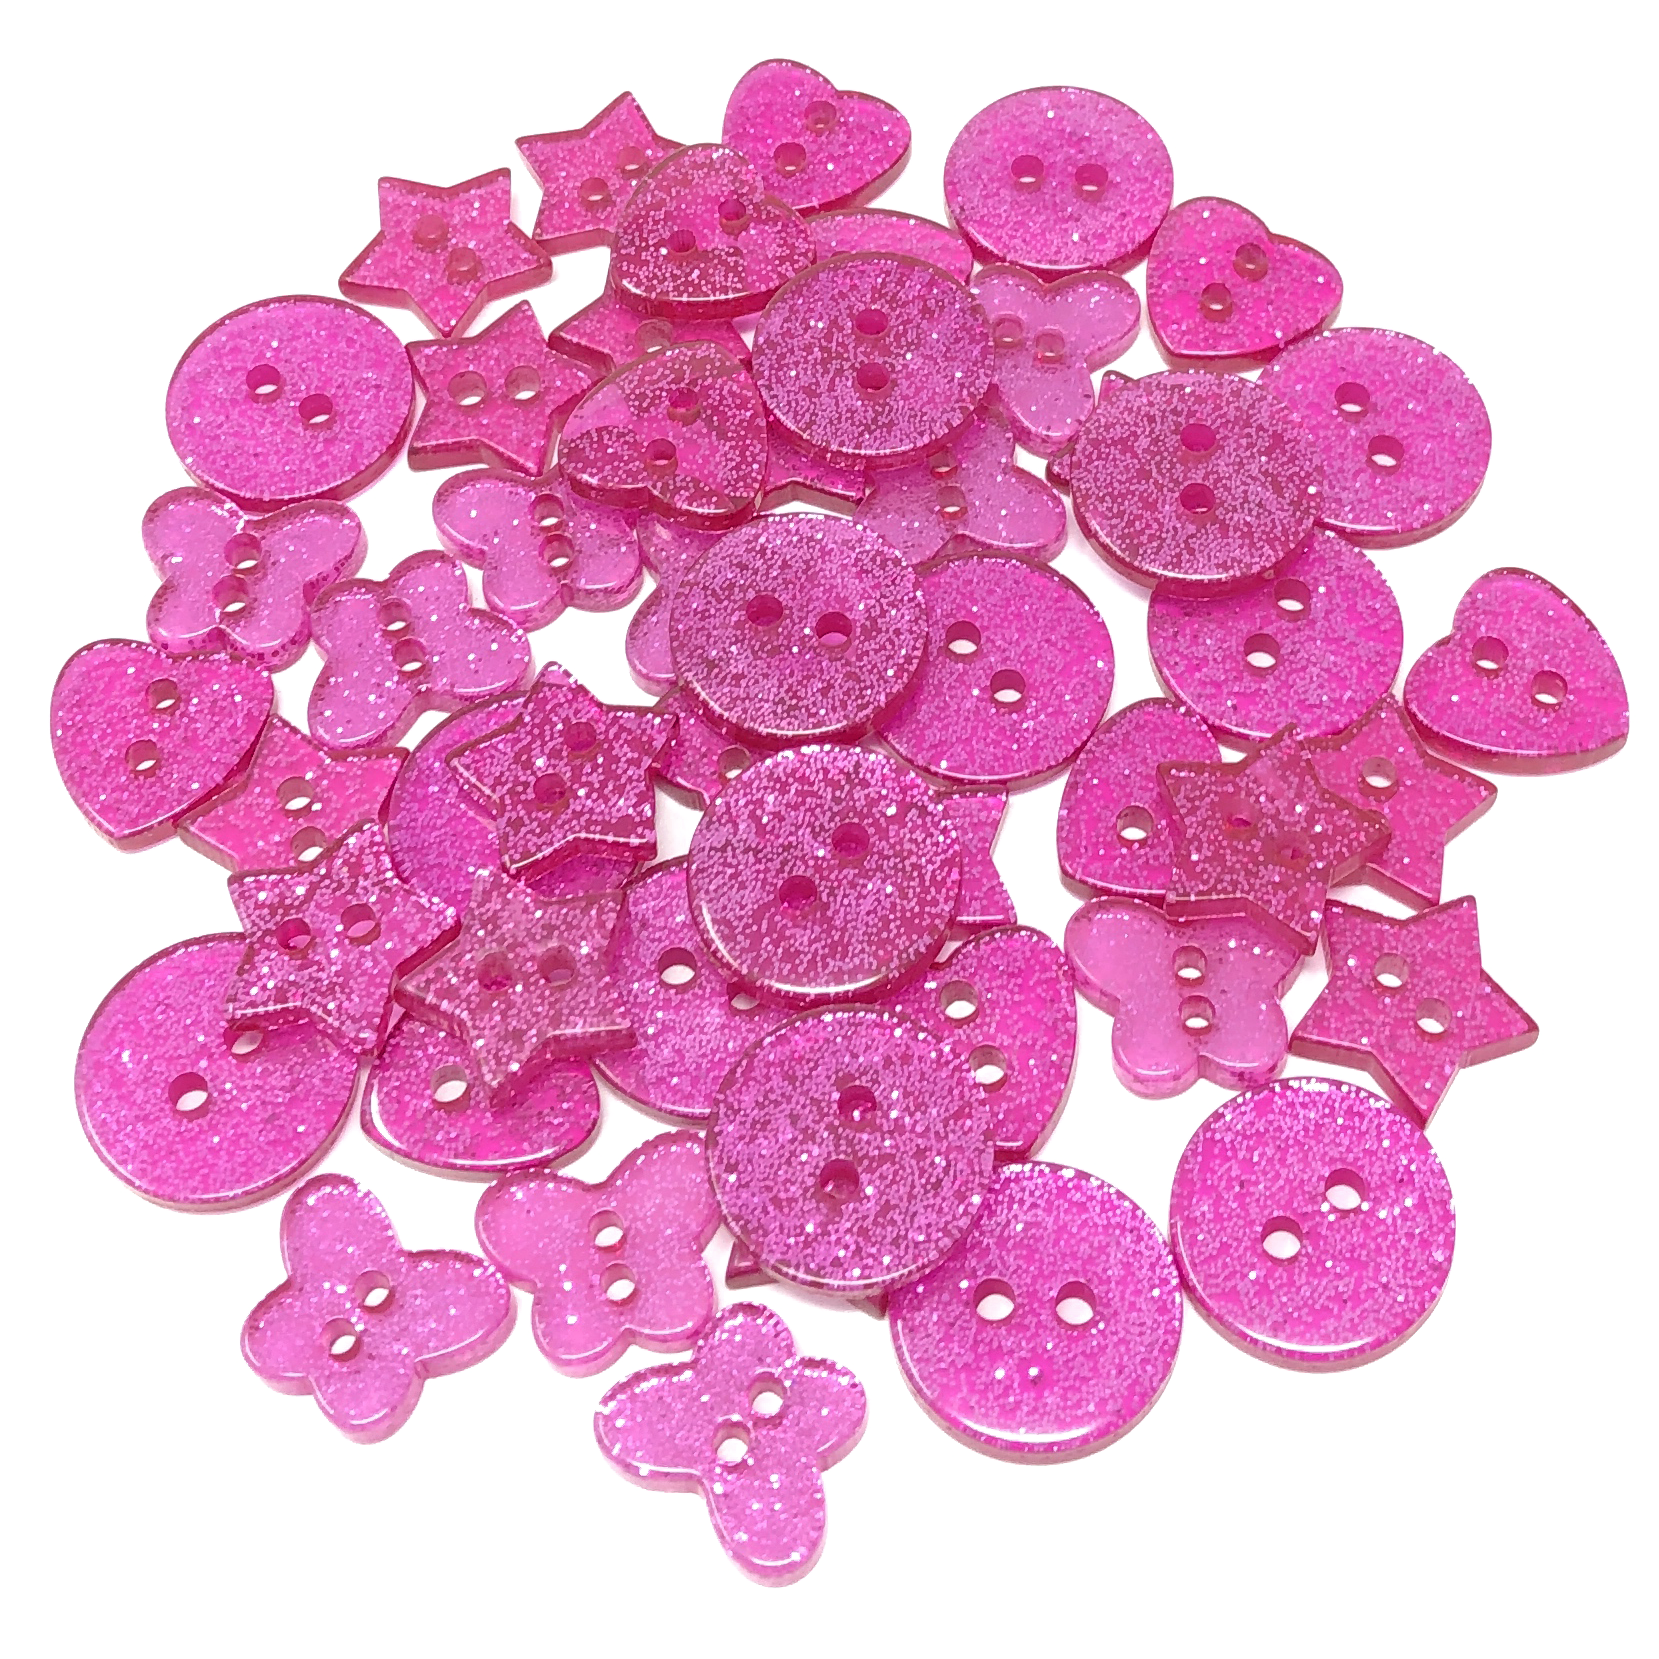 Bright Pink 50 Mix Glitter Mix Shape 13mm Resin Buttons